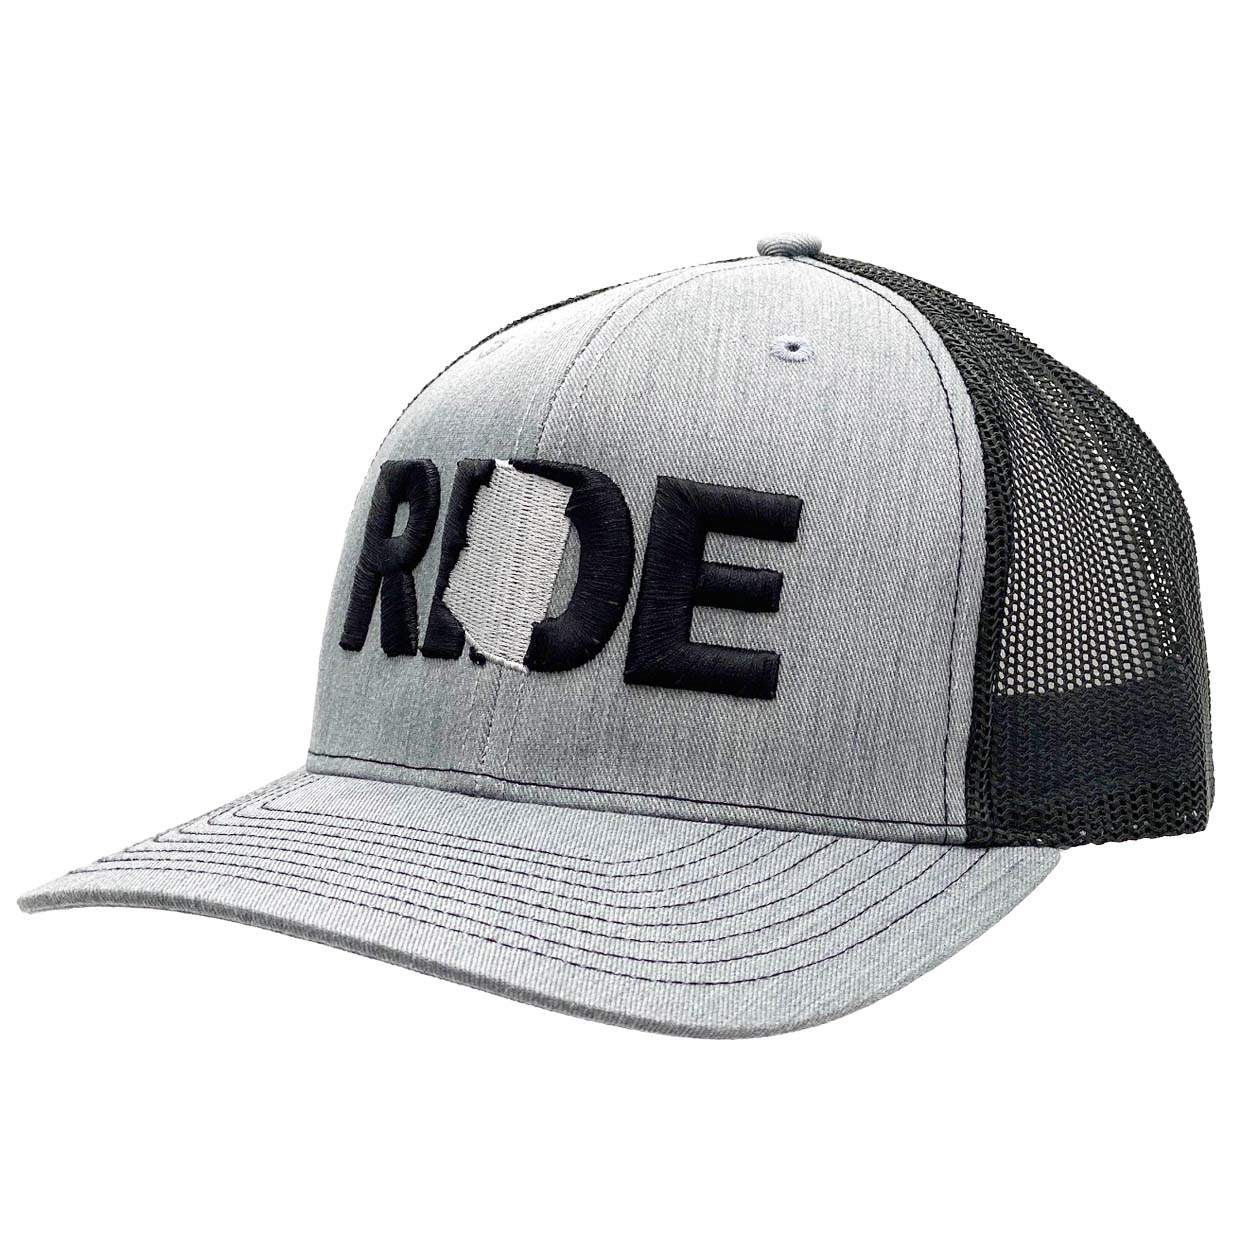 Ride Arizona Classic Pro 3D Puff Embroidered Snapback Trucker Hat Heather Gray/Black